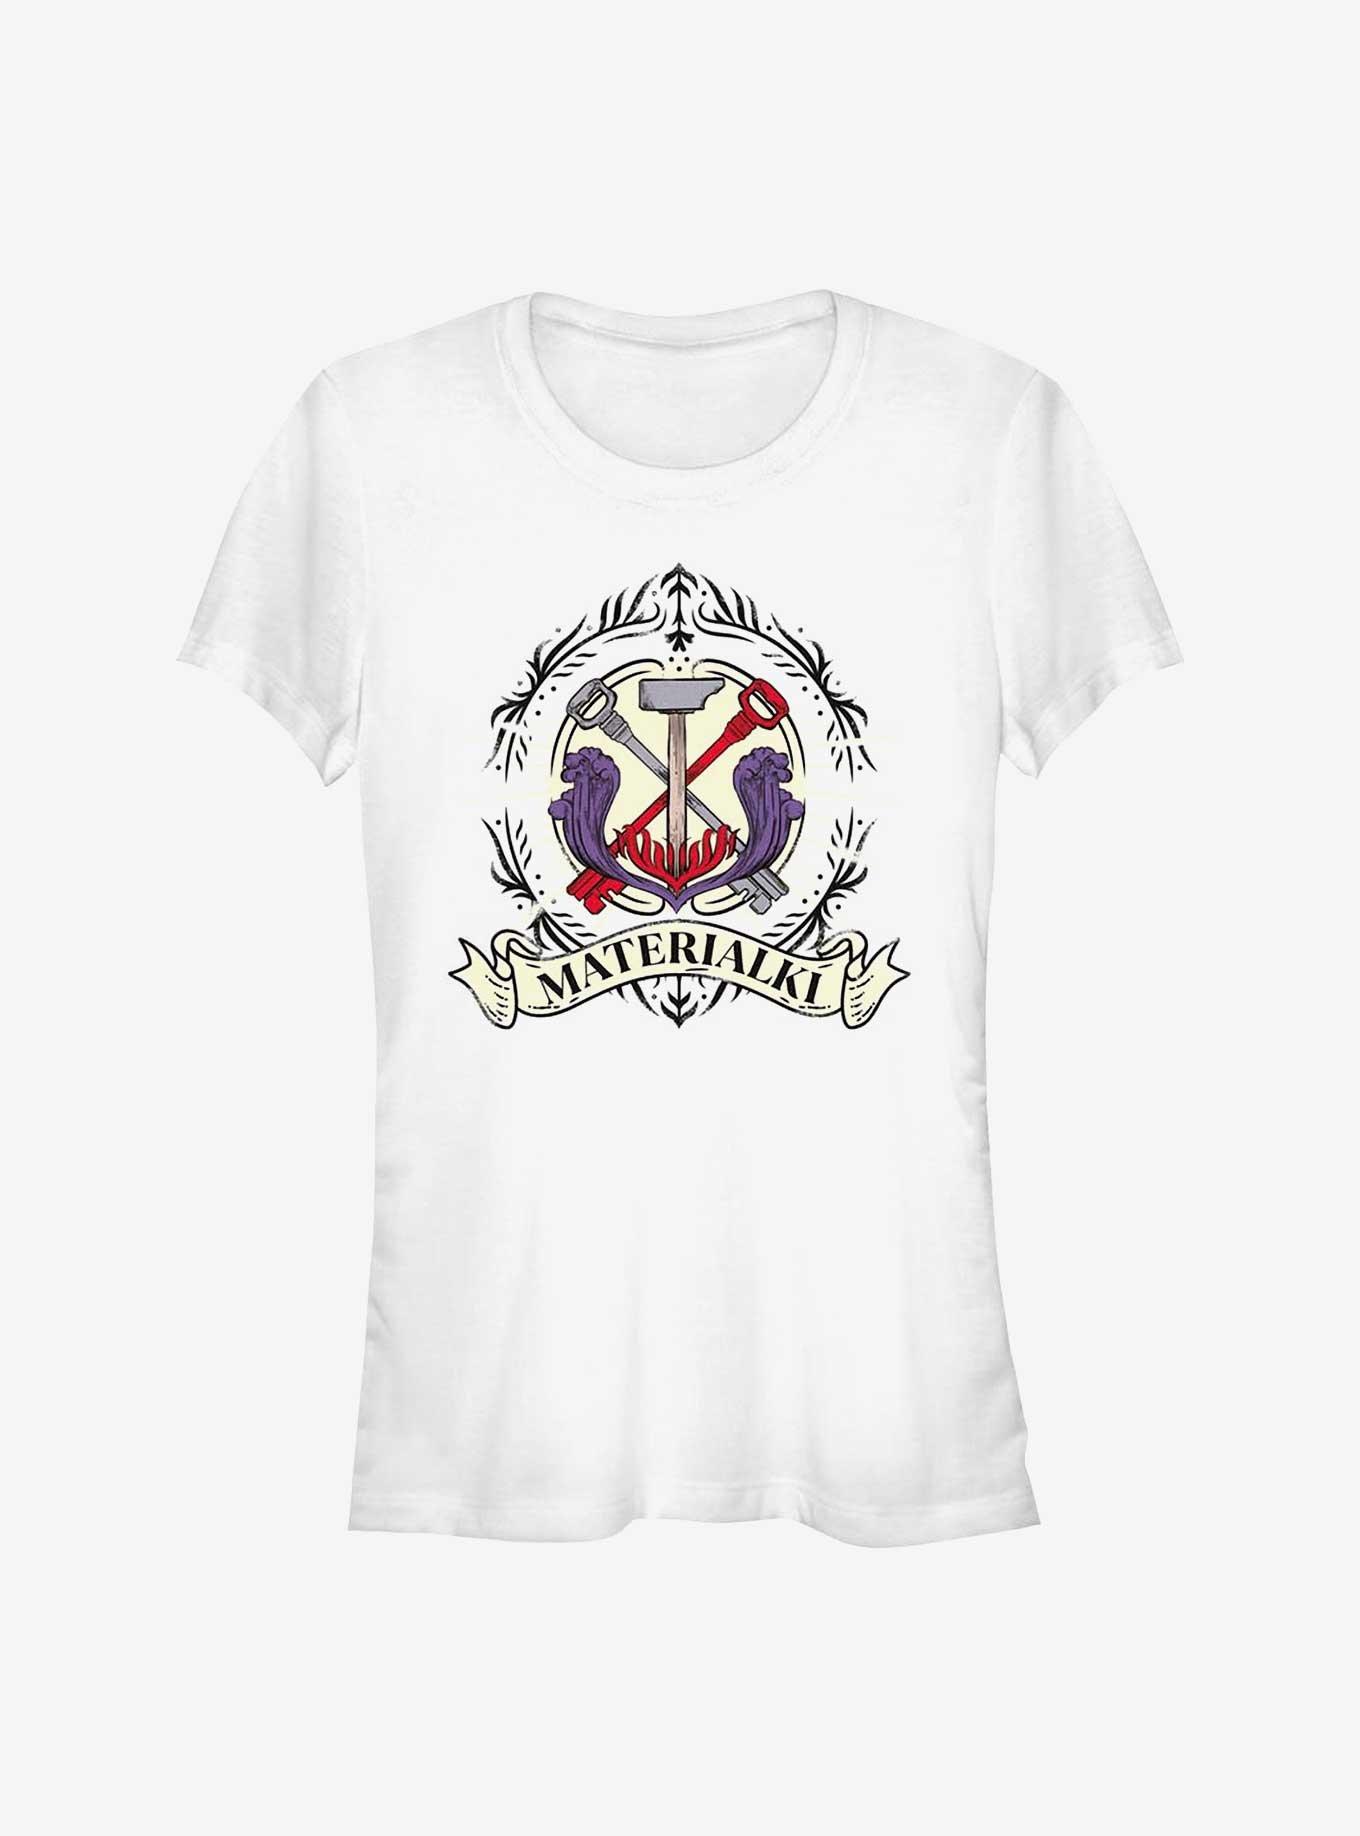 Shadow and Bone Materialki Hammer Girls T-Shirt, WHITE, hi-res